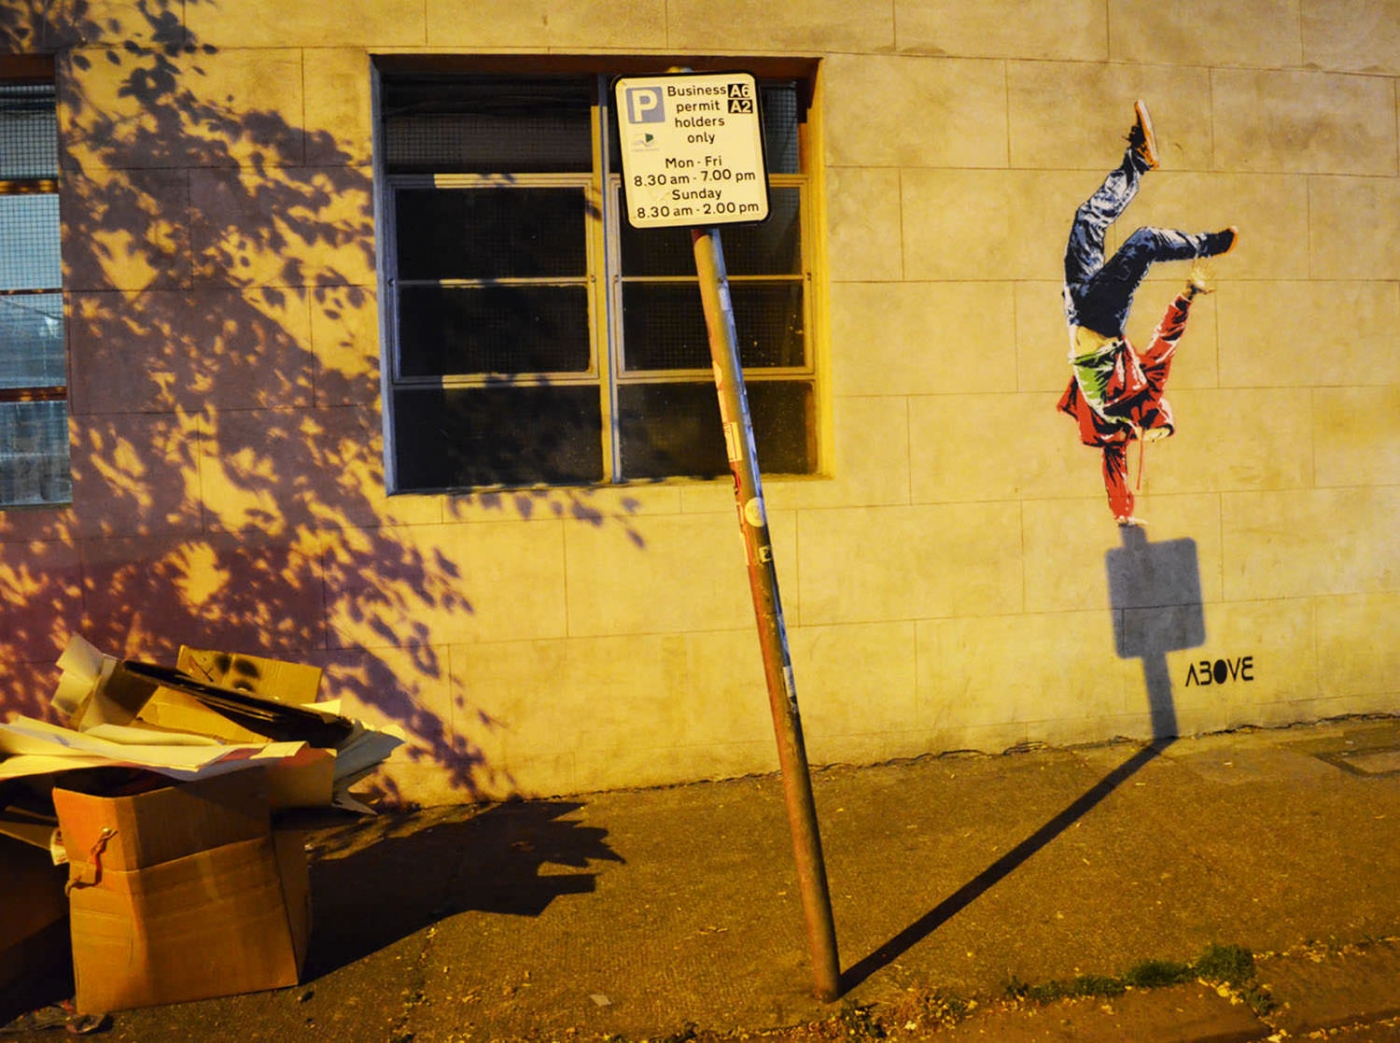 Above Tavar Zawacki street art - 15 Playful Street Artists